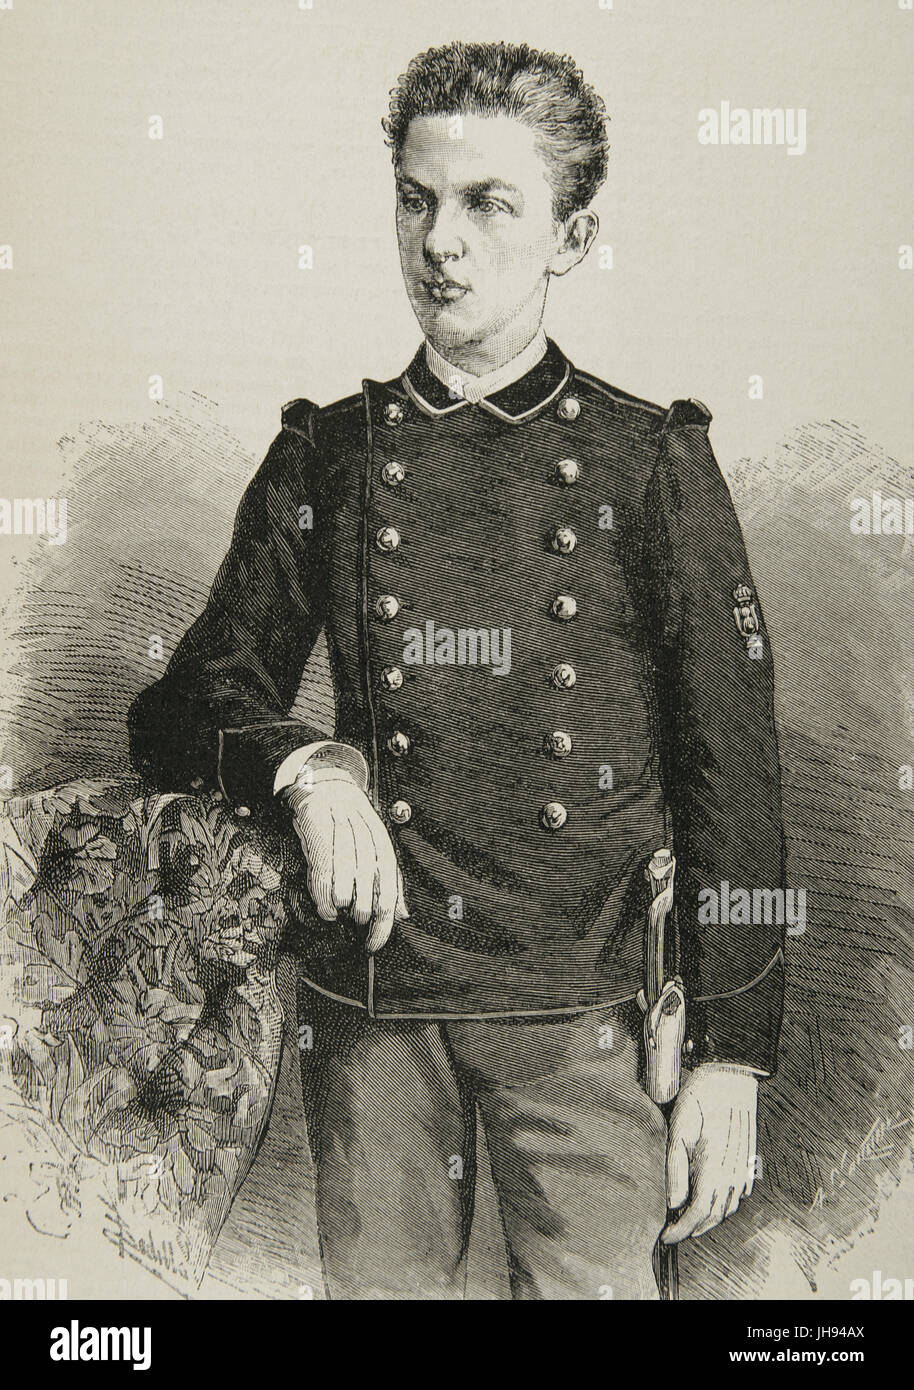 Victor Emmanuel III (1869-1947). Roi d'Italie. Gravure par Arturo Carretero (1852-1903) dans l'Almanach de l'Illustration, 1888. Banque D'Images